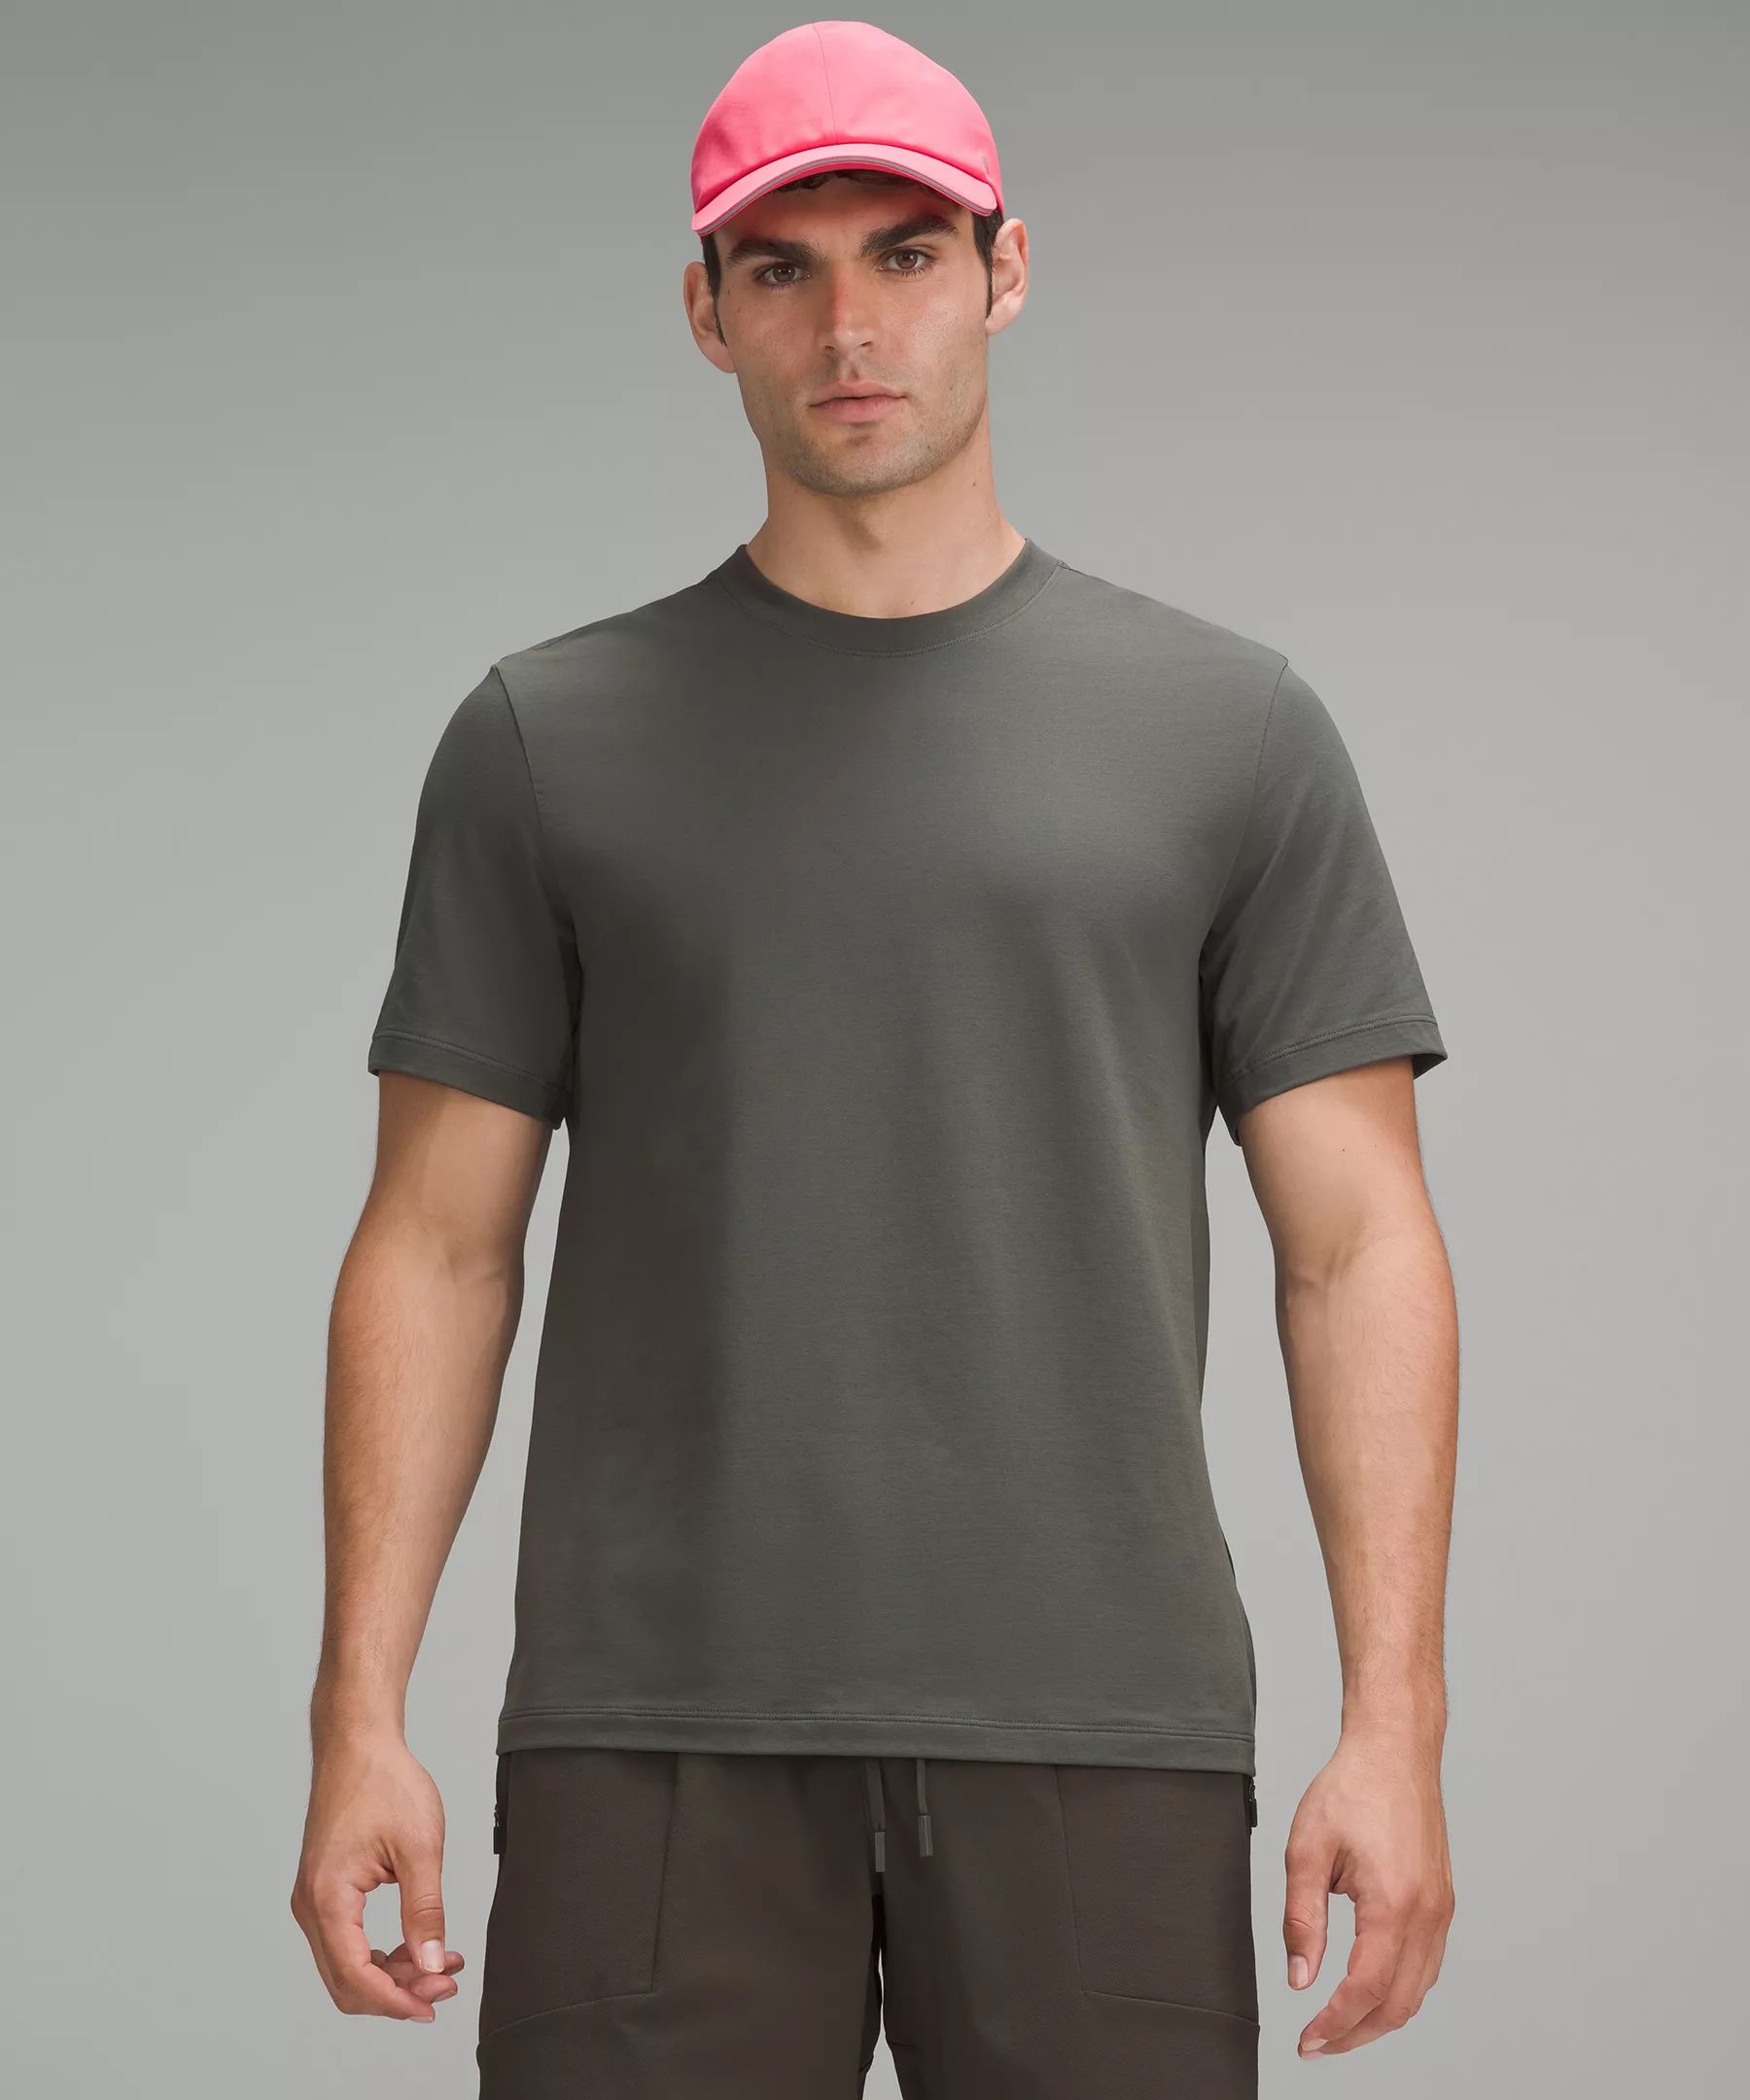 Zeroed In Short-Sleeve Shirt | Men's Short Sleeve Shirts & Tee's | lululemon | Lululemon (US)